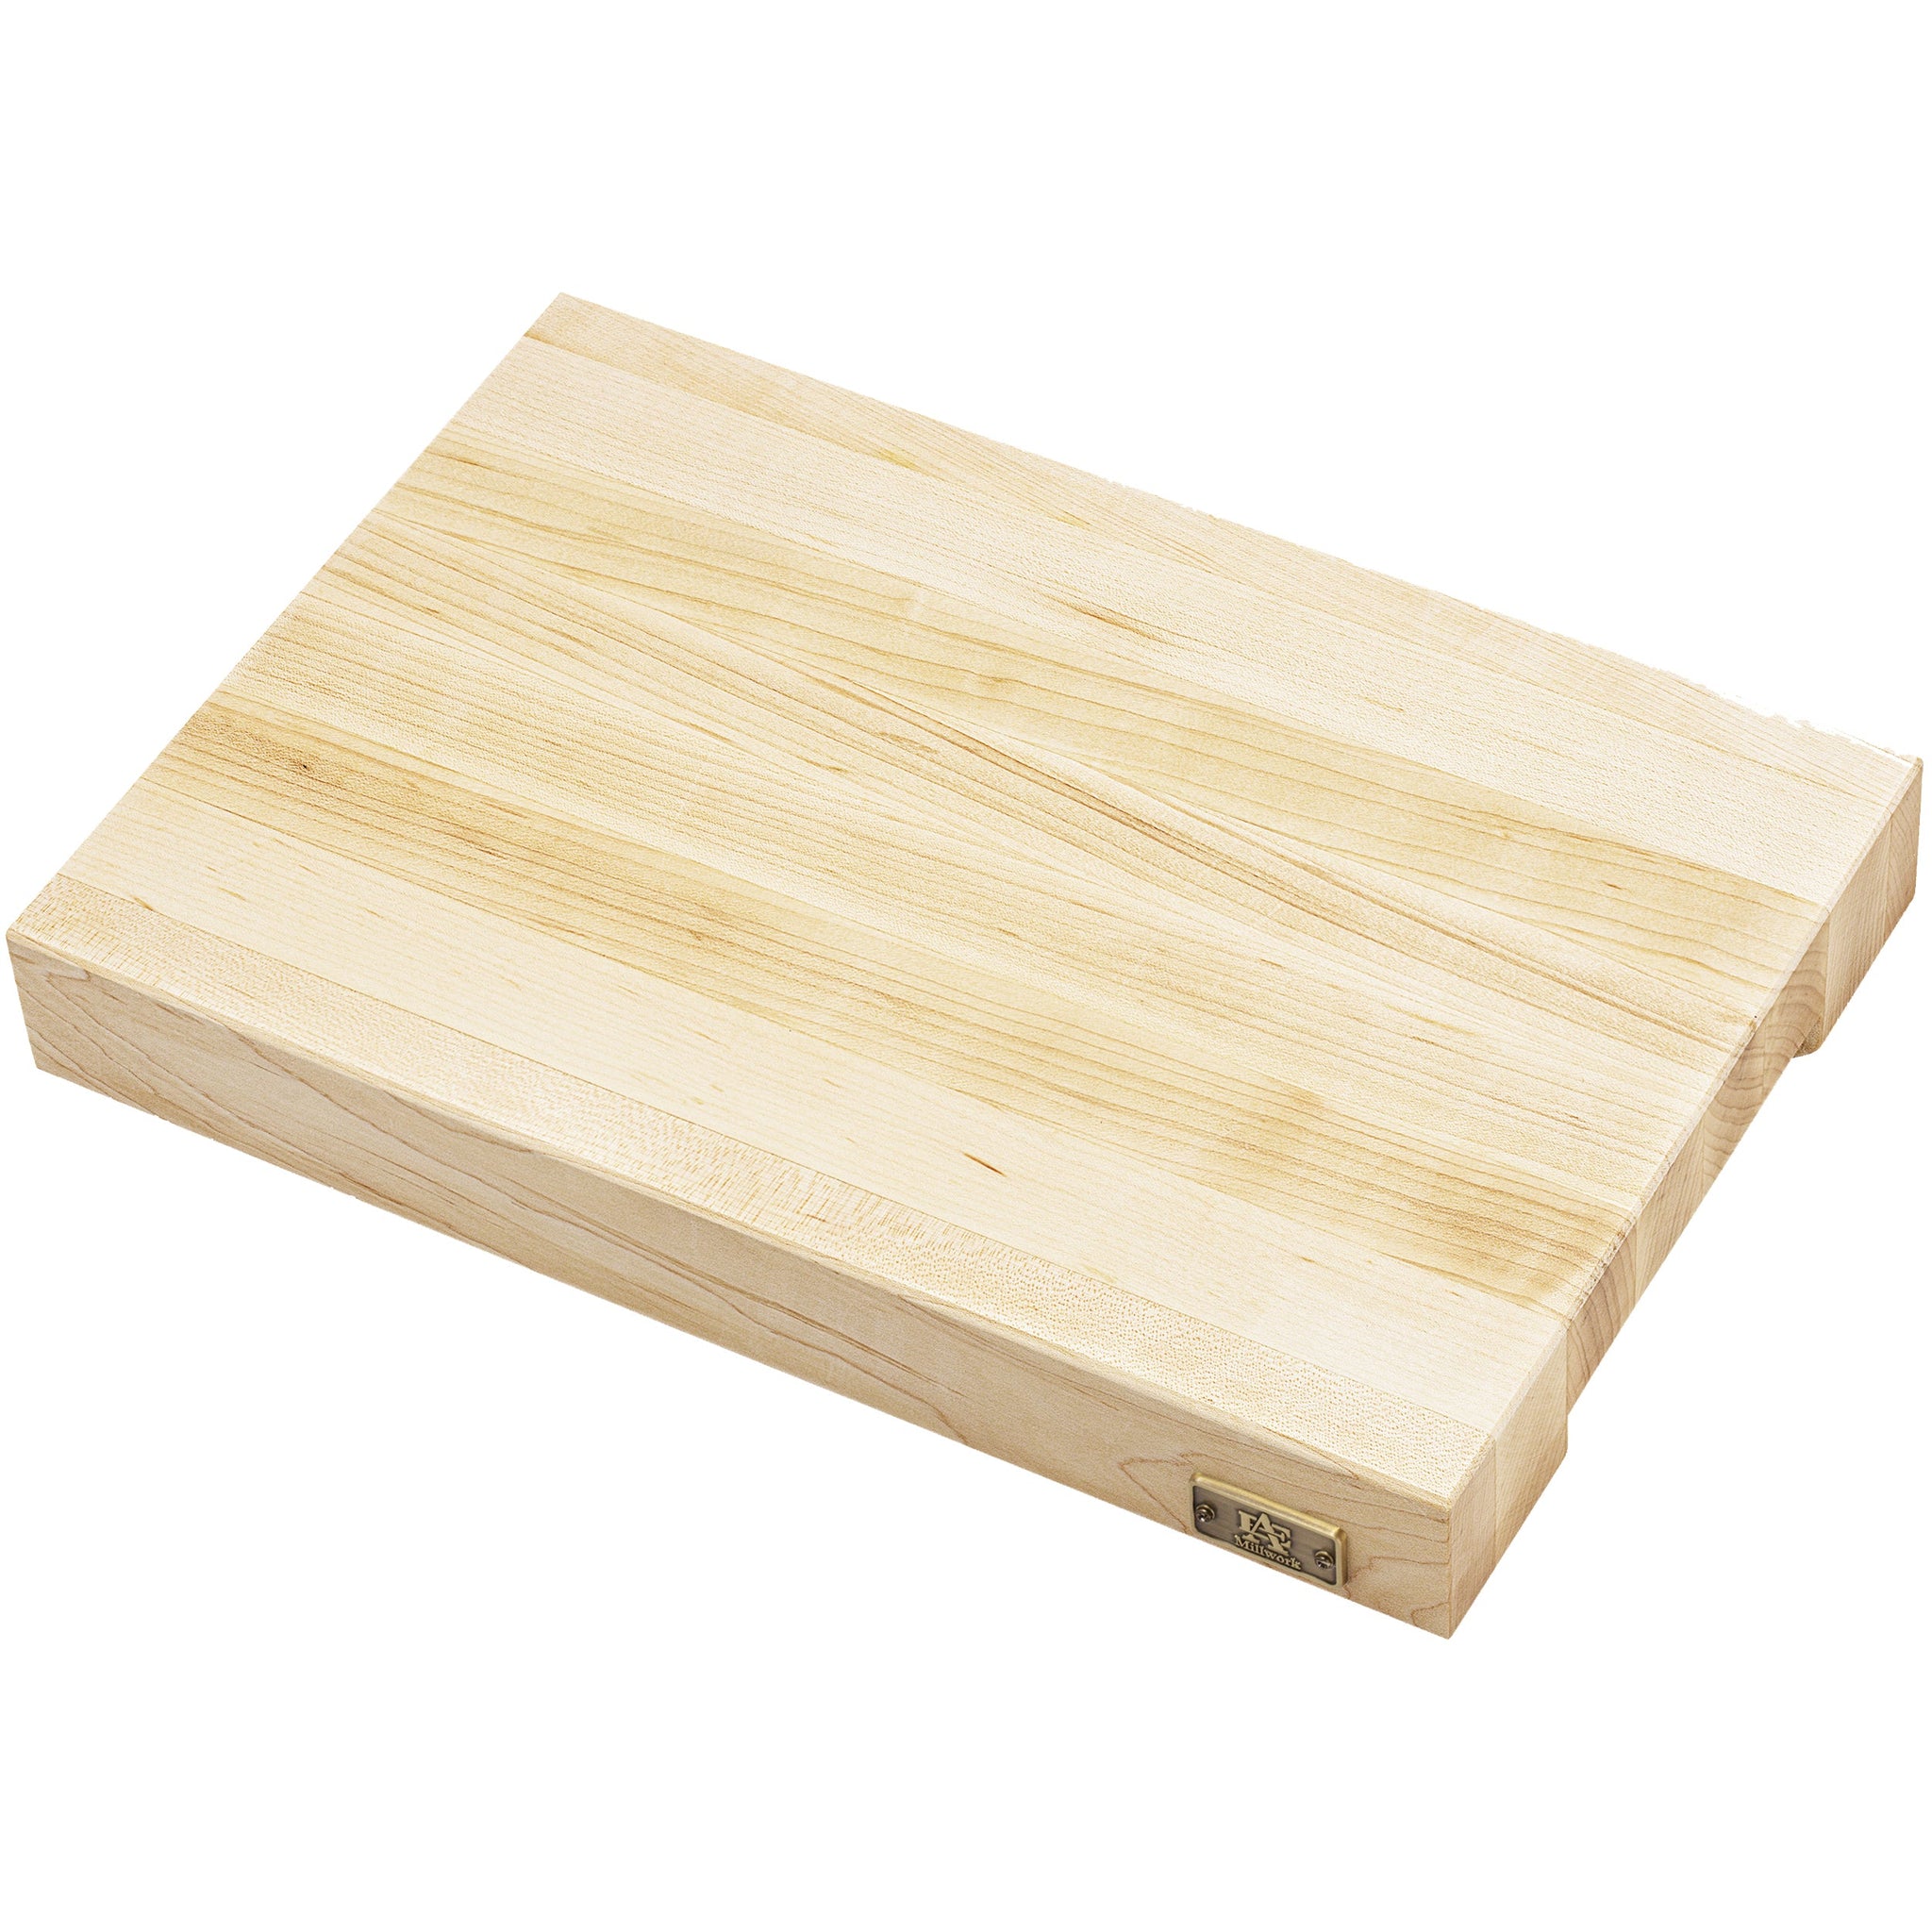 Alice Cutting Board Maple Wood Edge Grain Handmade ( with free gift)